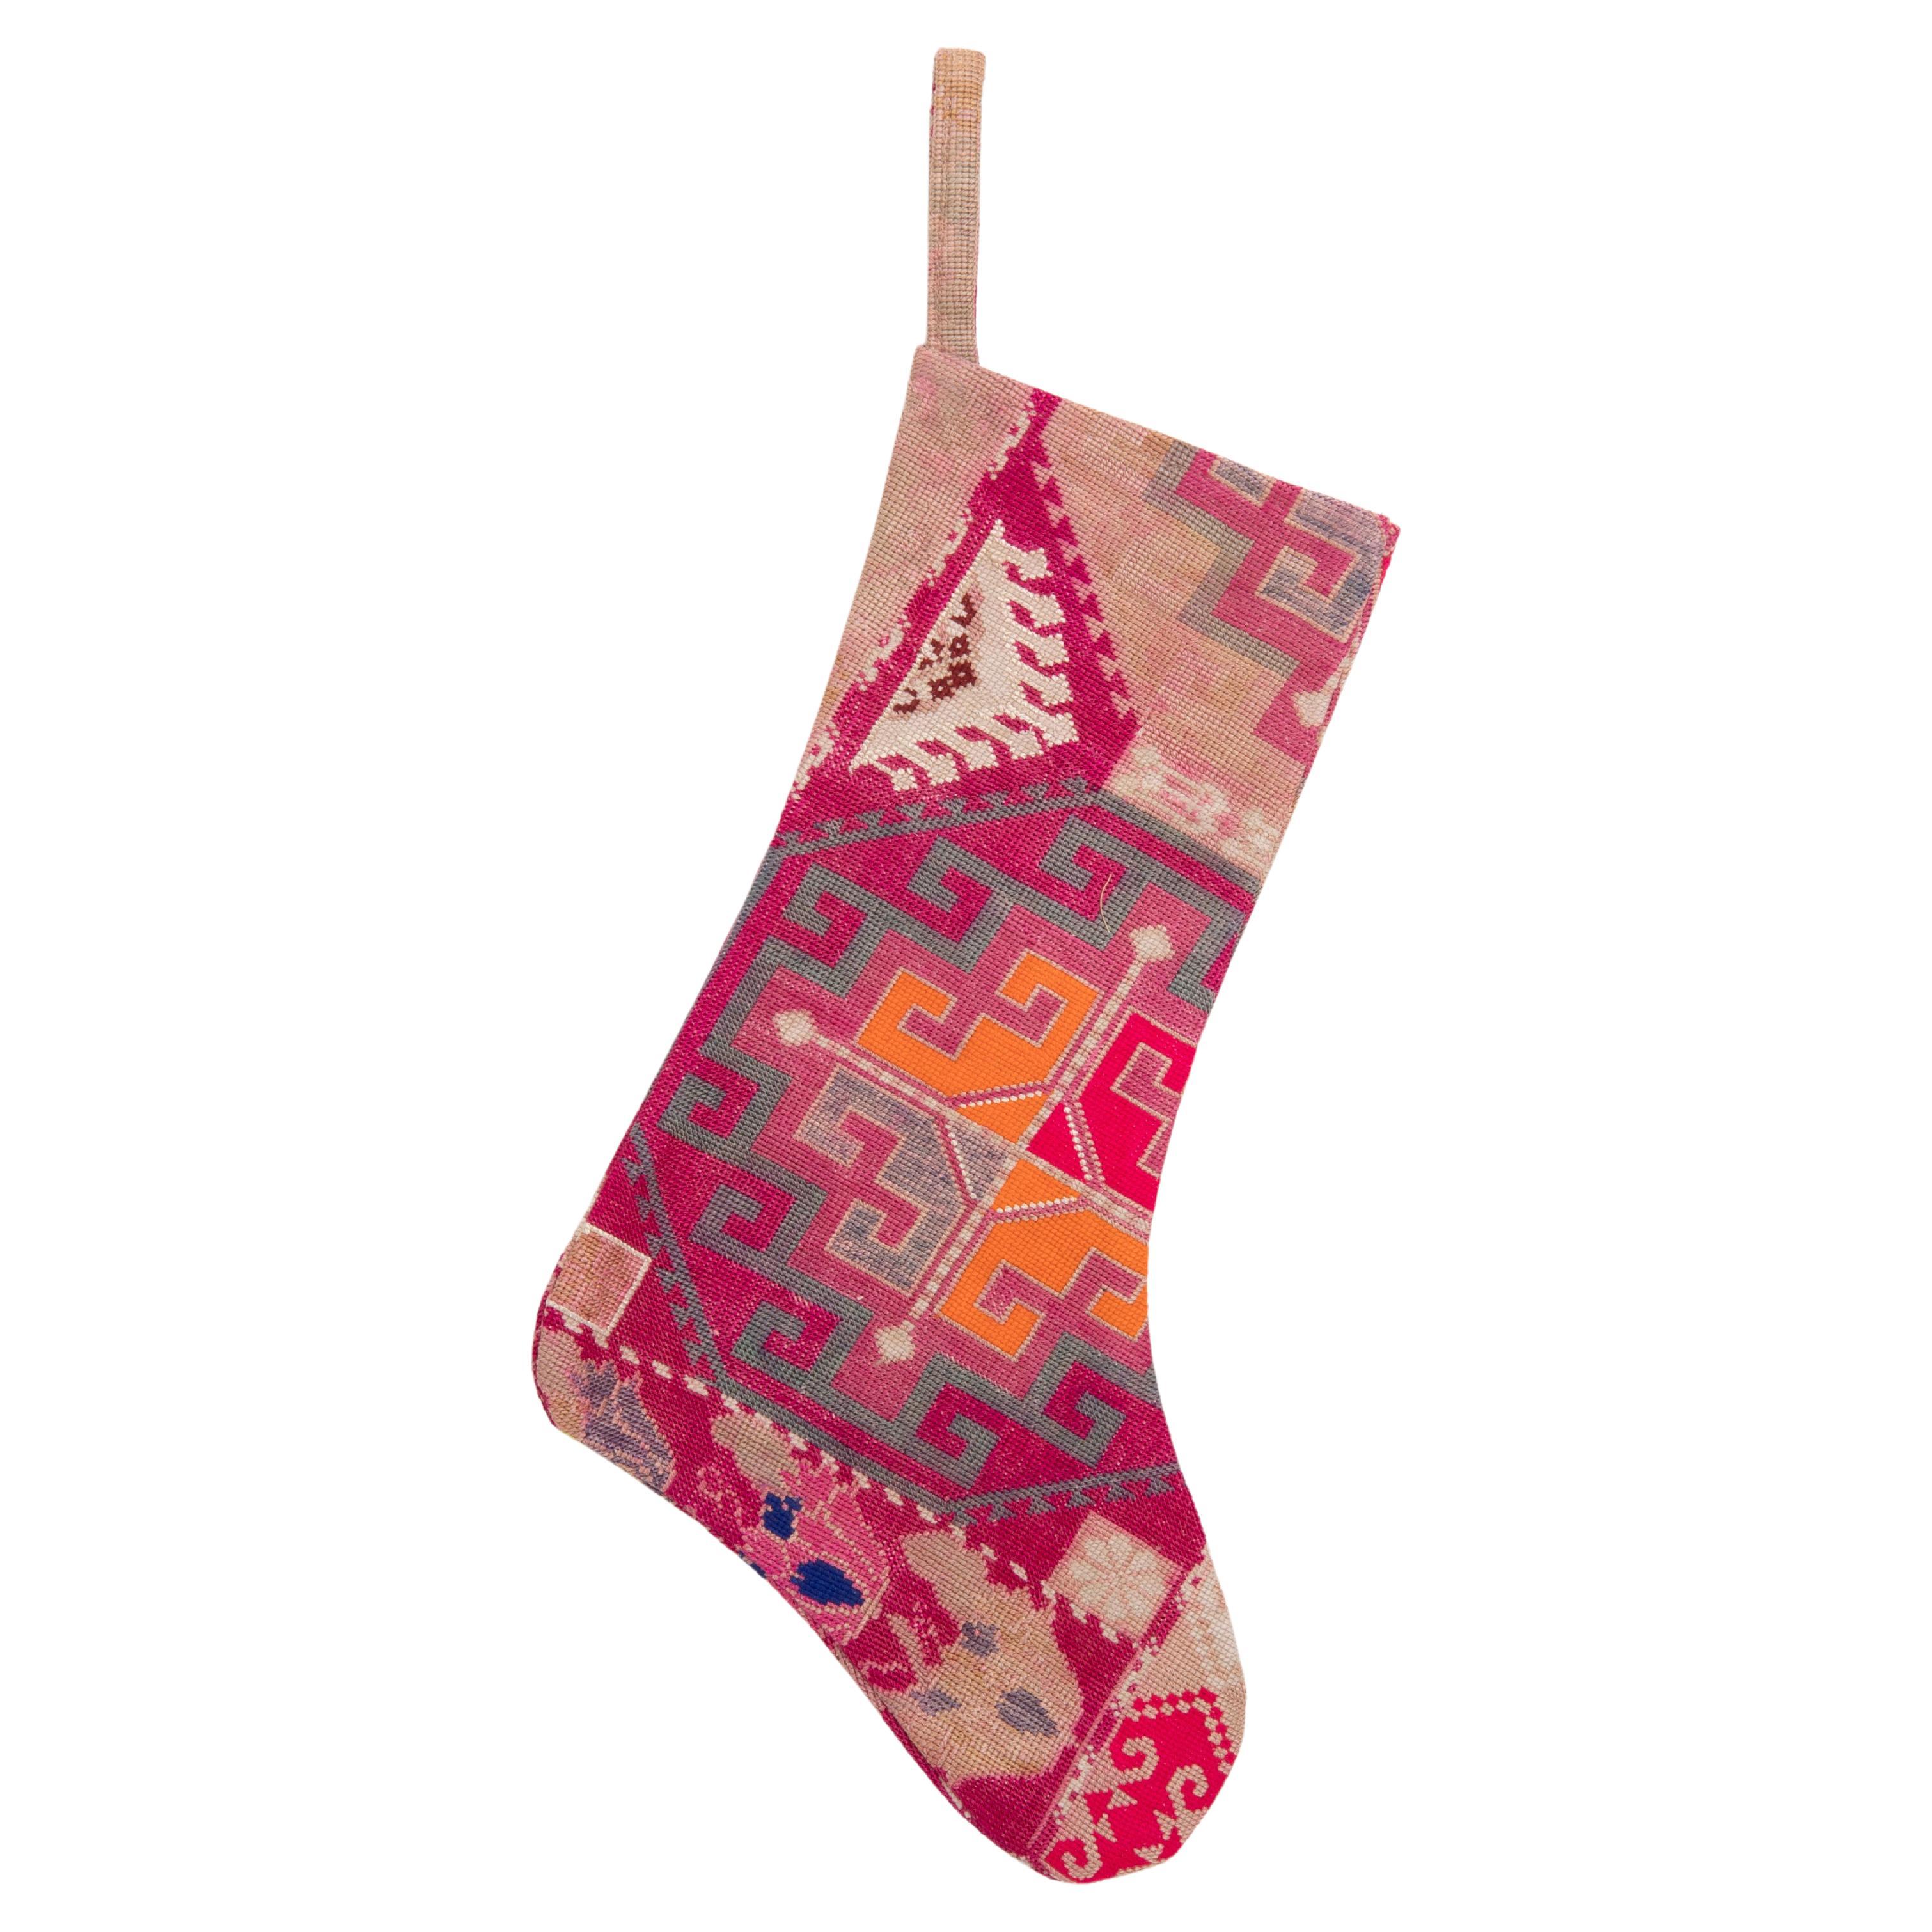 Double Sided Christmas Stockings Made from Vintage Uzbek Lakai Embroidery